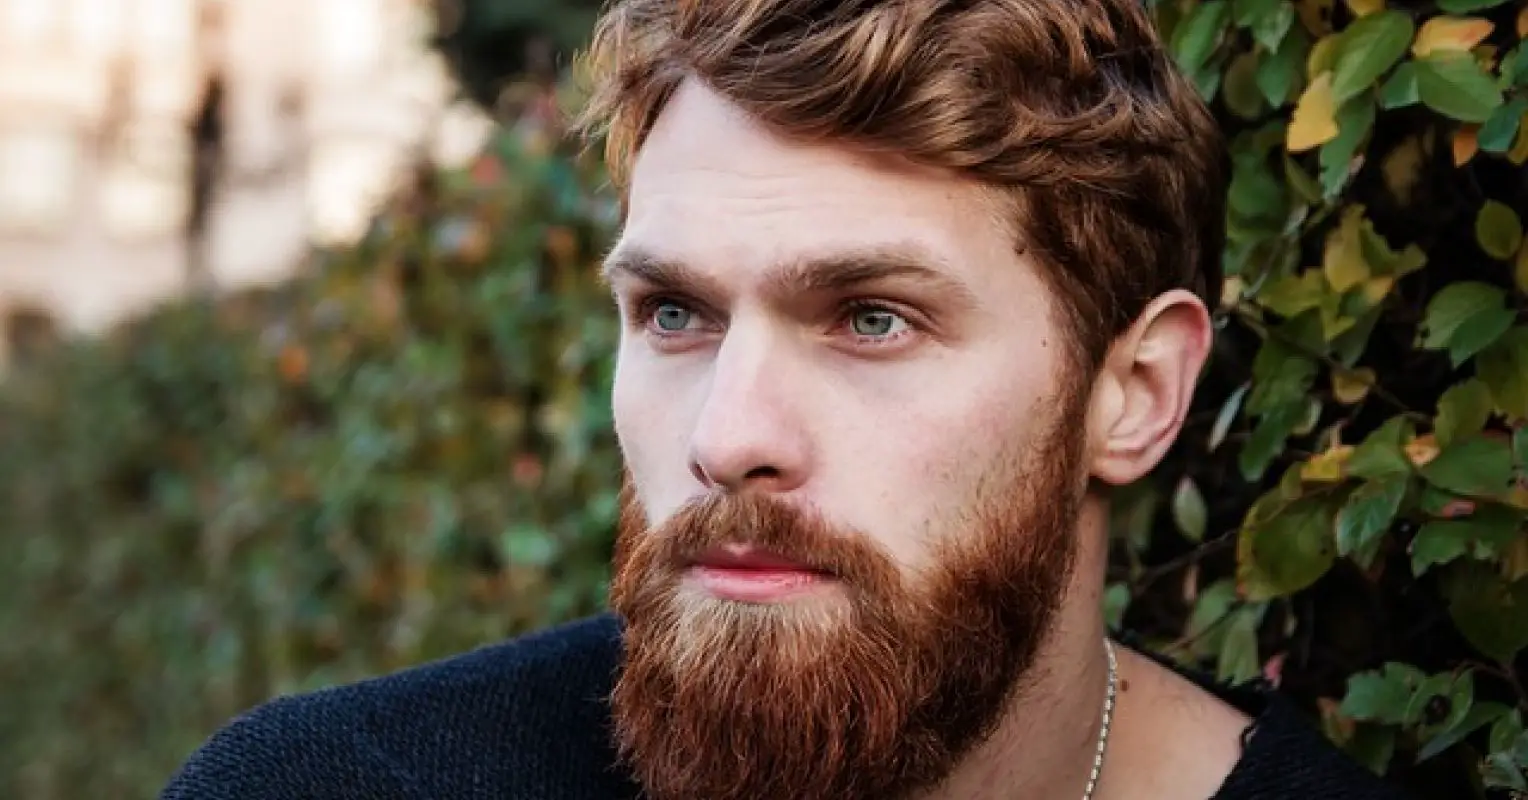 How to use Beard Oil? – 4 Amazing Ways [Secrets to Growing Beard]